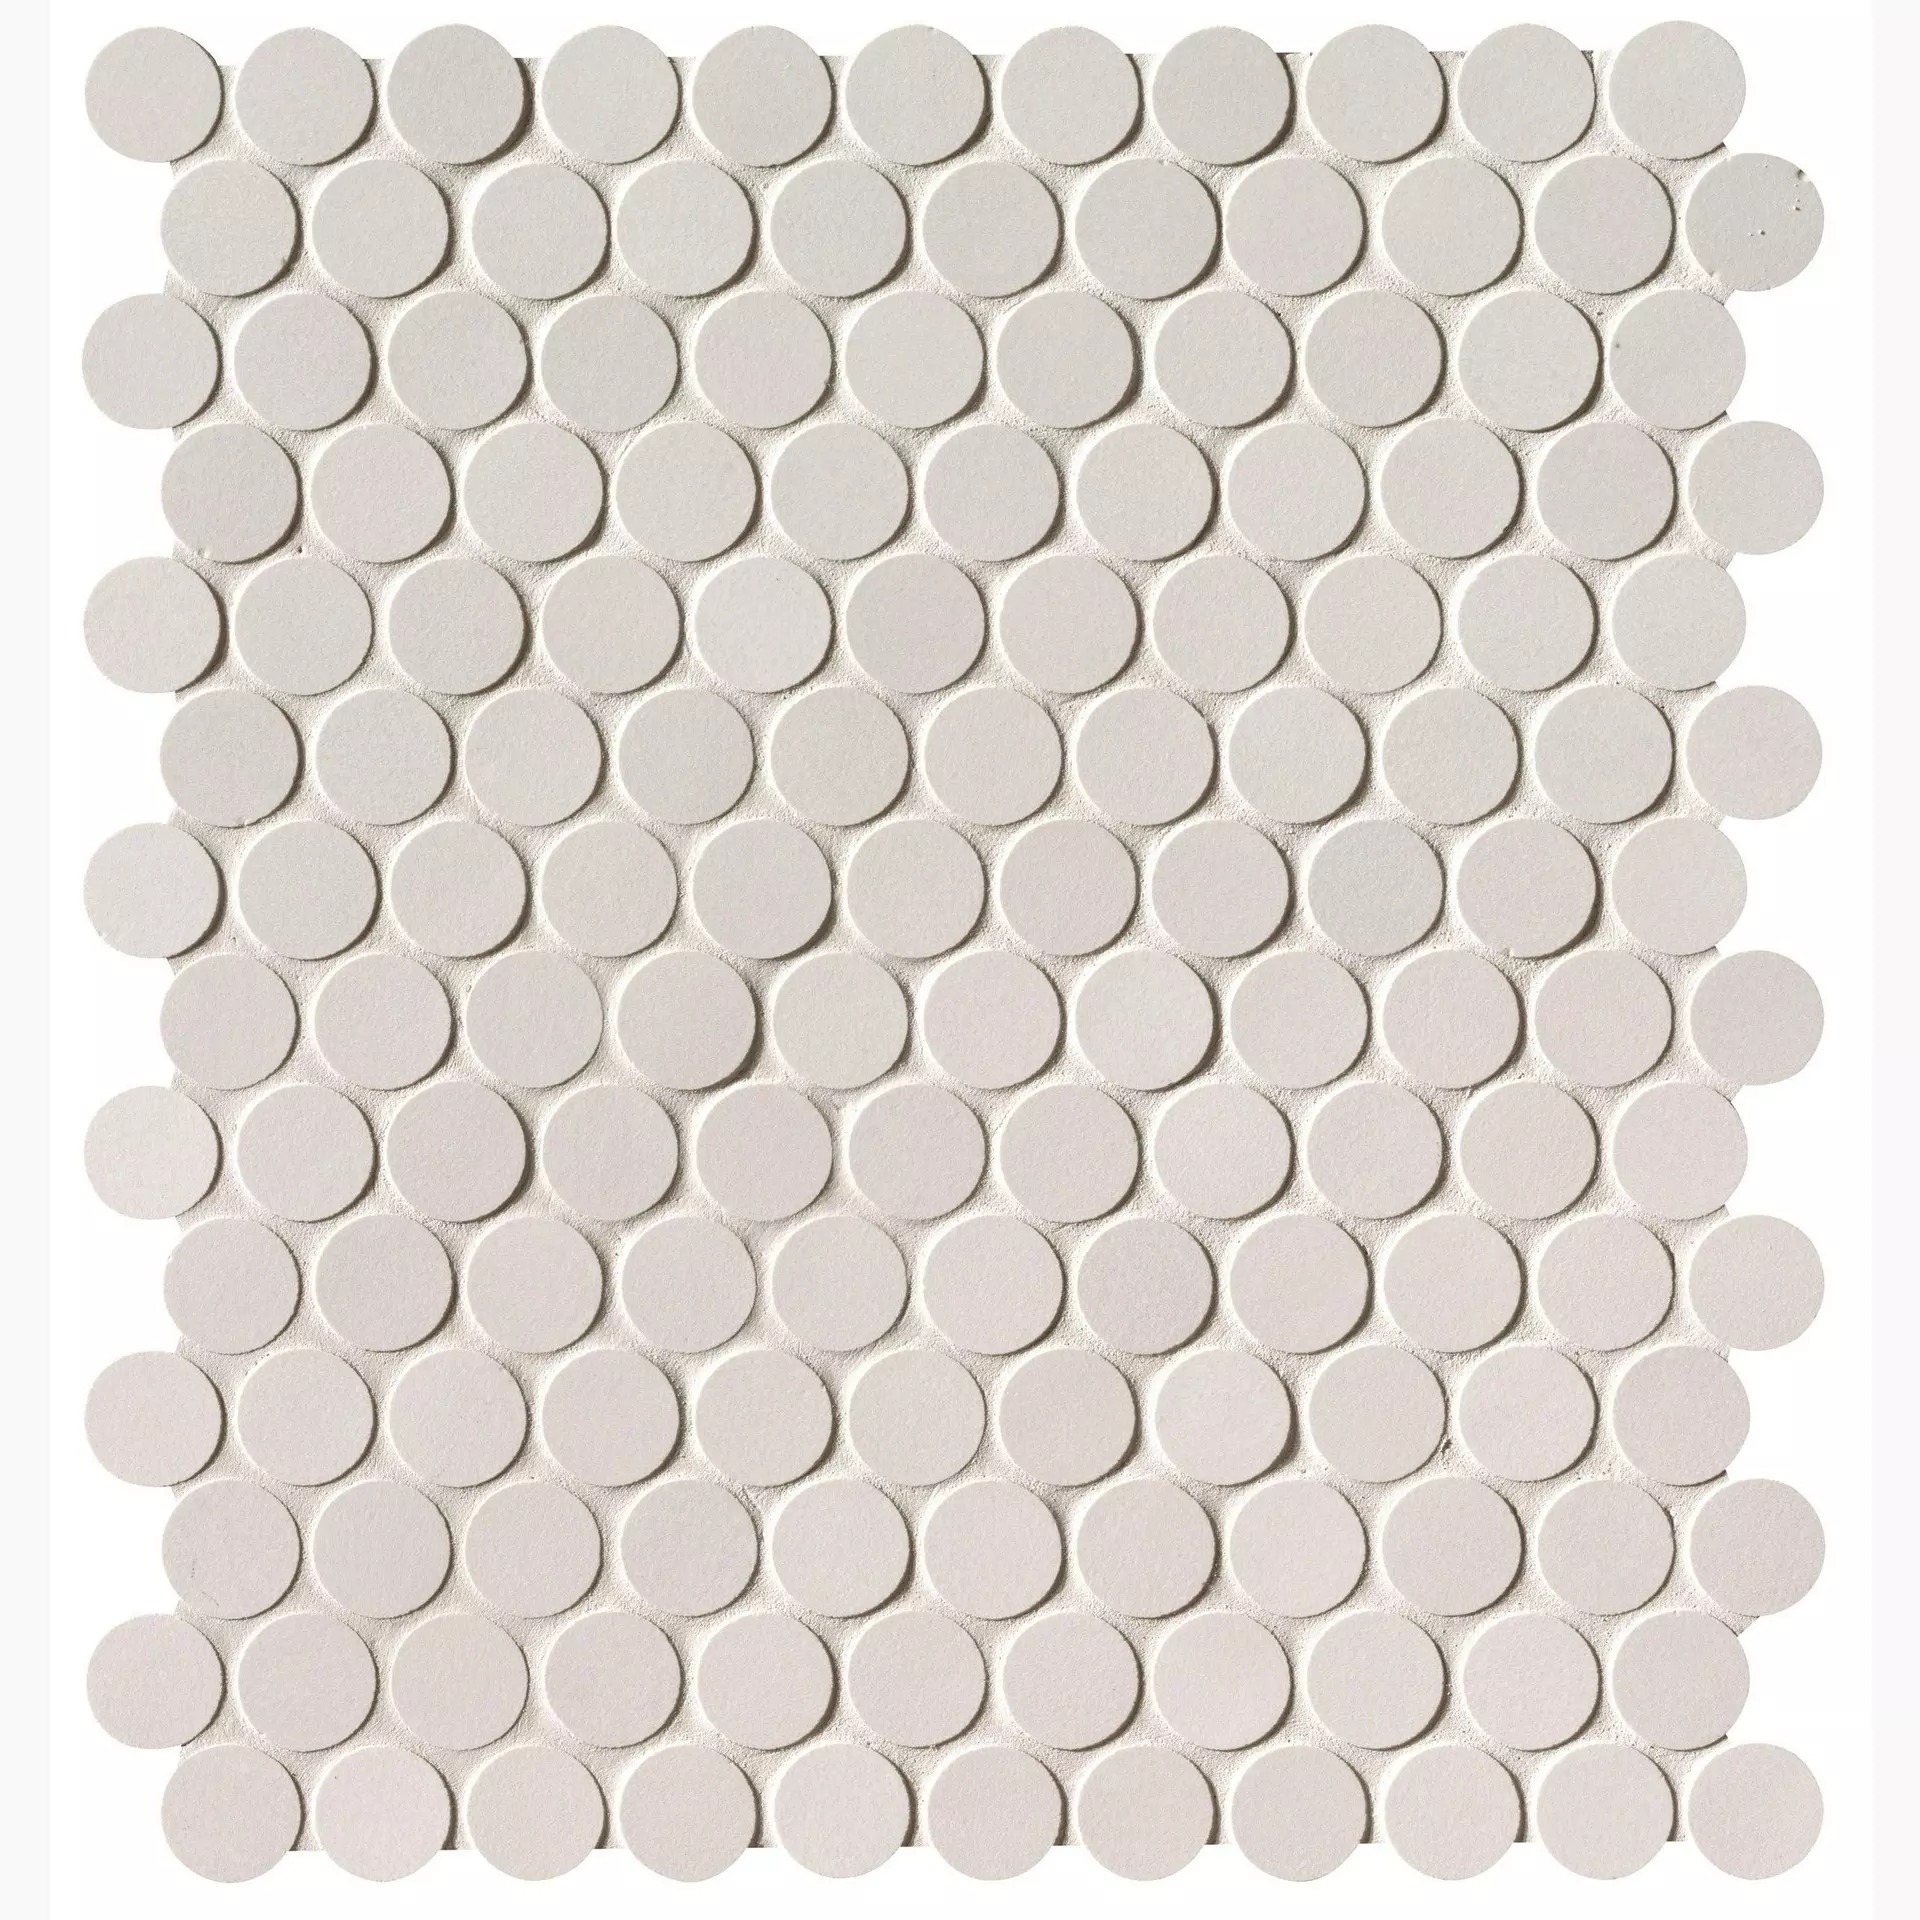 FAP Milano & Floor Bianco Matt Bianco fNSV matt 29,5x35cm Mosaik Round